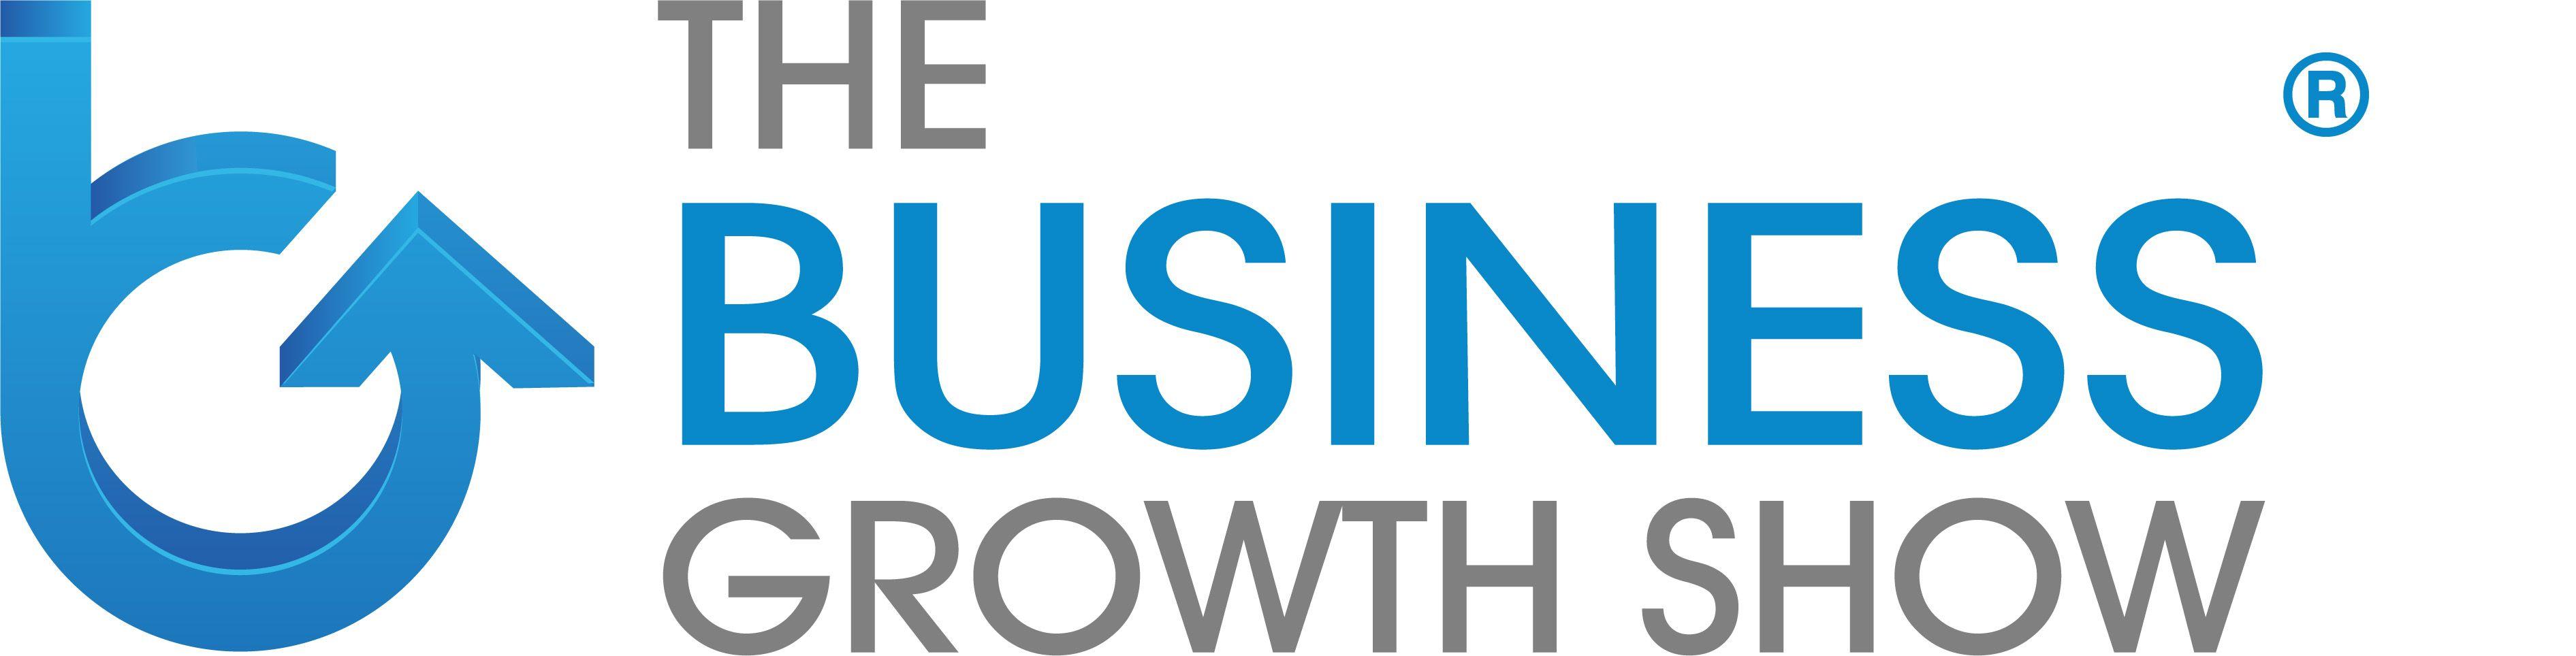 All Business Show Logo - Customer Reviews and Case Studies | Award Winning Online Recruitment ...